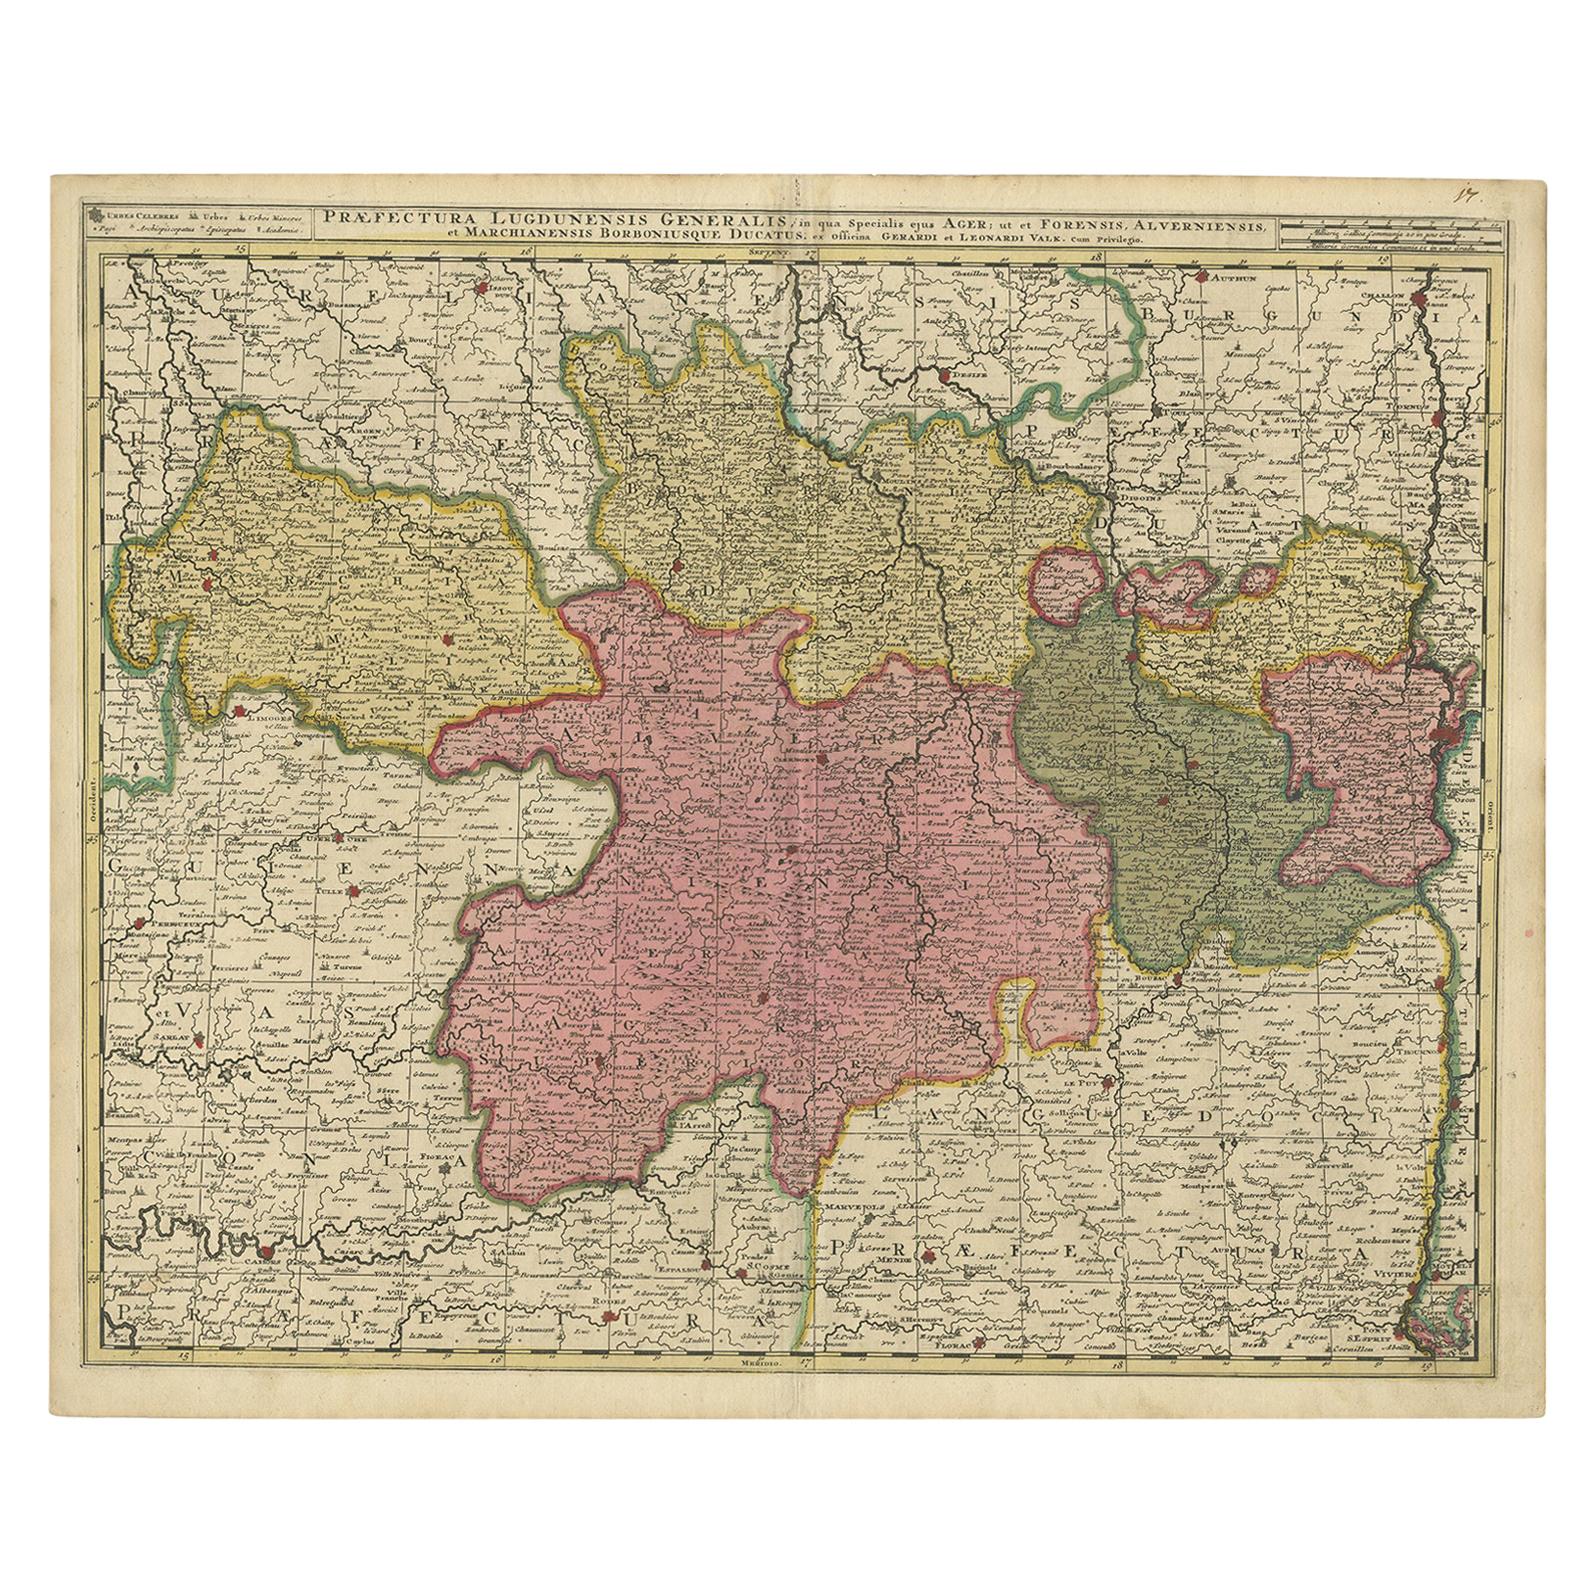 Antique Map of the Auvergne-Rhône-Alpes region of France by Valk, circa 1730